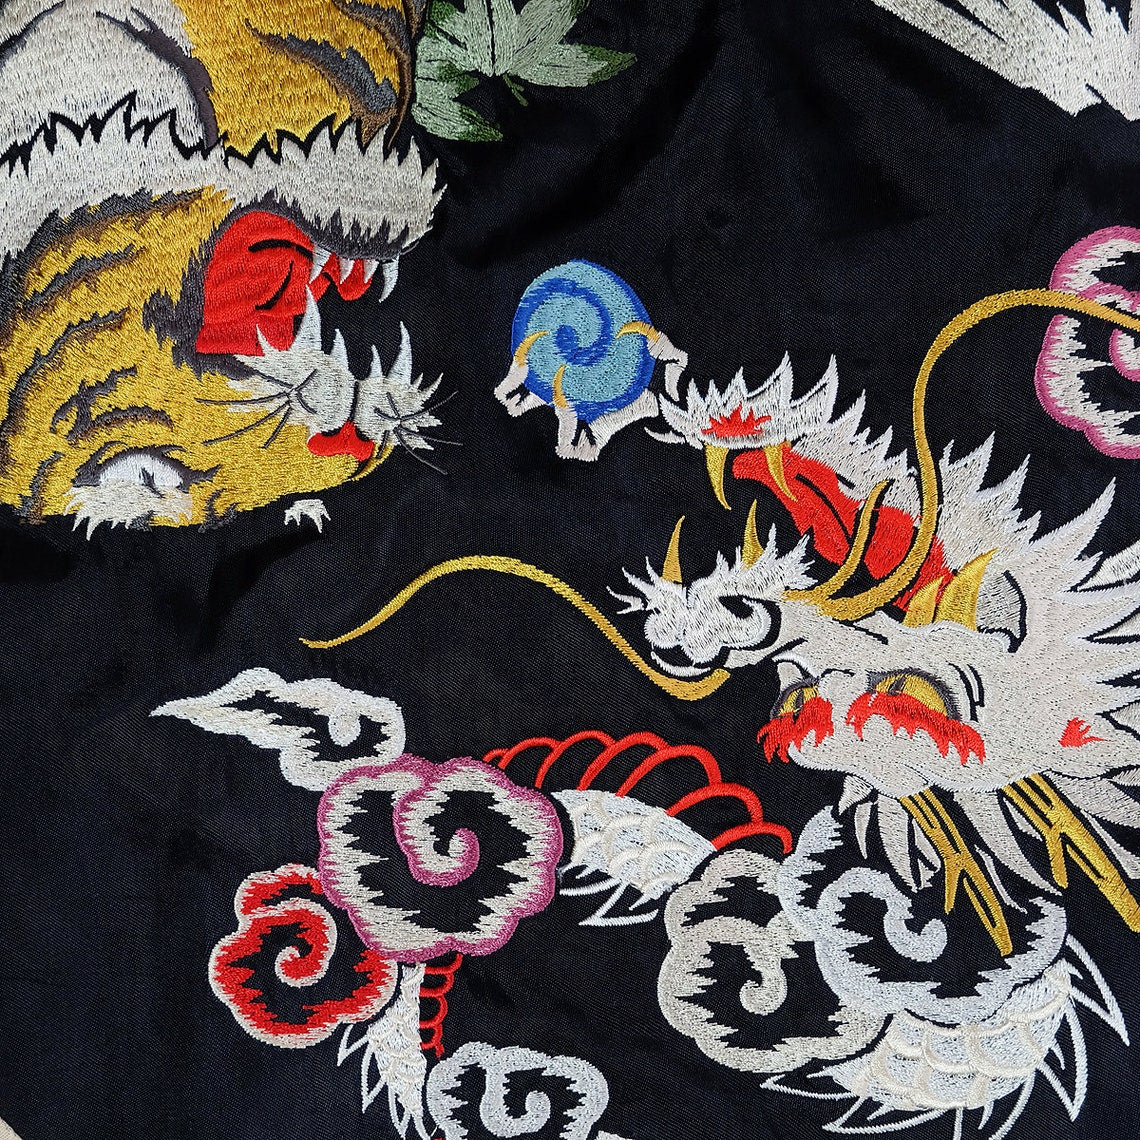 Japanese Street Fashion VINTAGE CROPPED HEADS RYU DRAGON VS ROARING TIGER TORA MT FUJI SNAKE TURTLE CRANE HEBI KAME TSURU Paint Print EMBROIDERY Embroidered SUKAJAN JACKET ( SIZE : M )